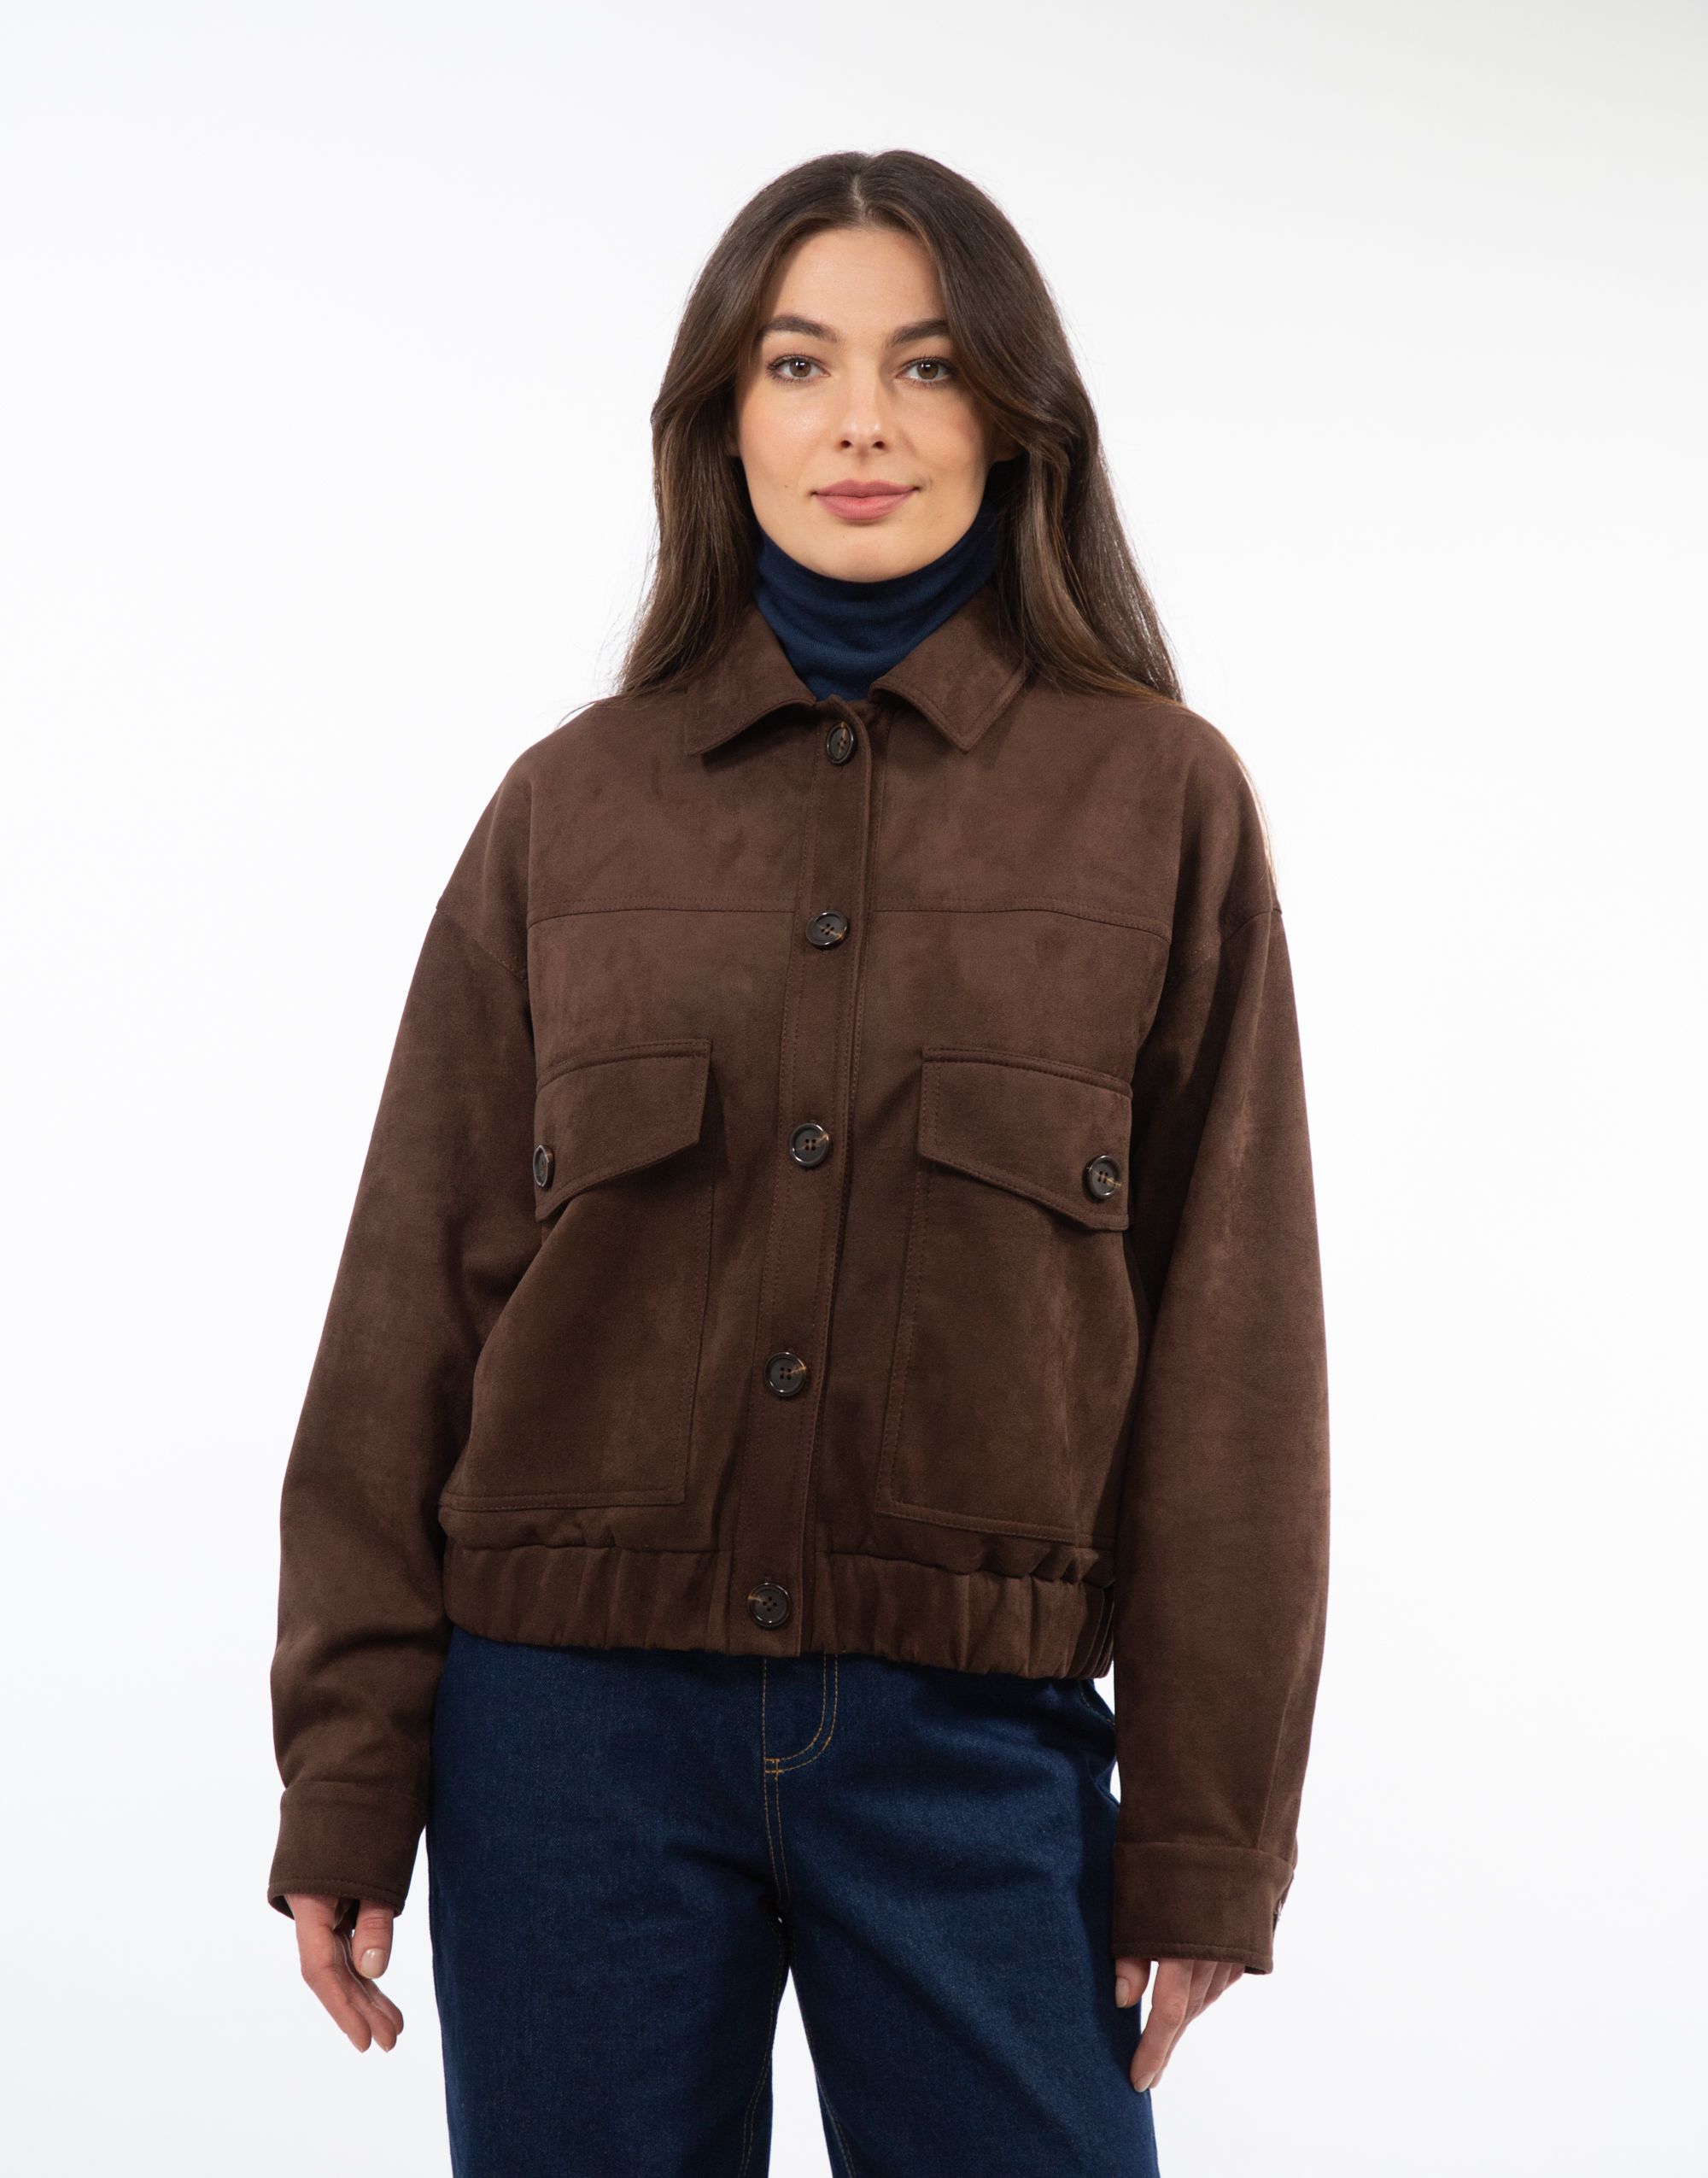 Bomber jacket, pattern №1100 buy on-line